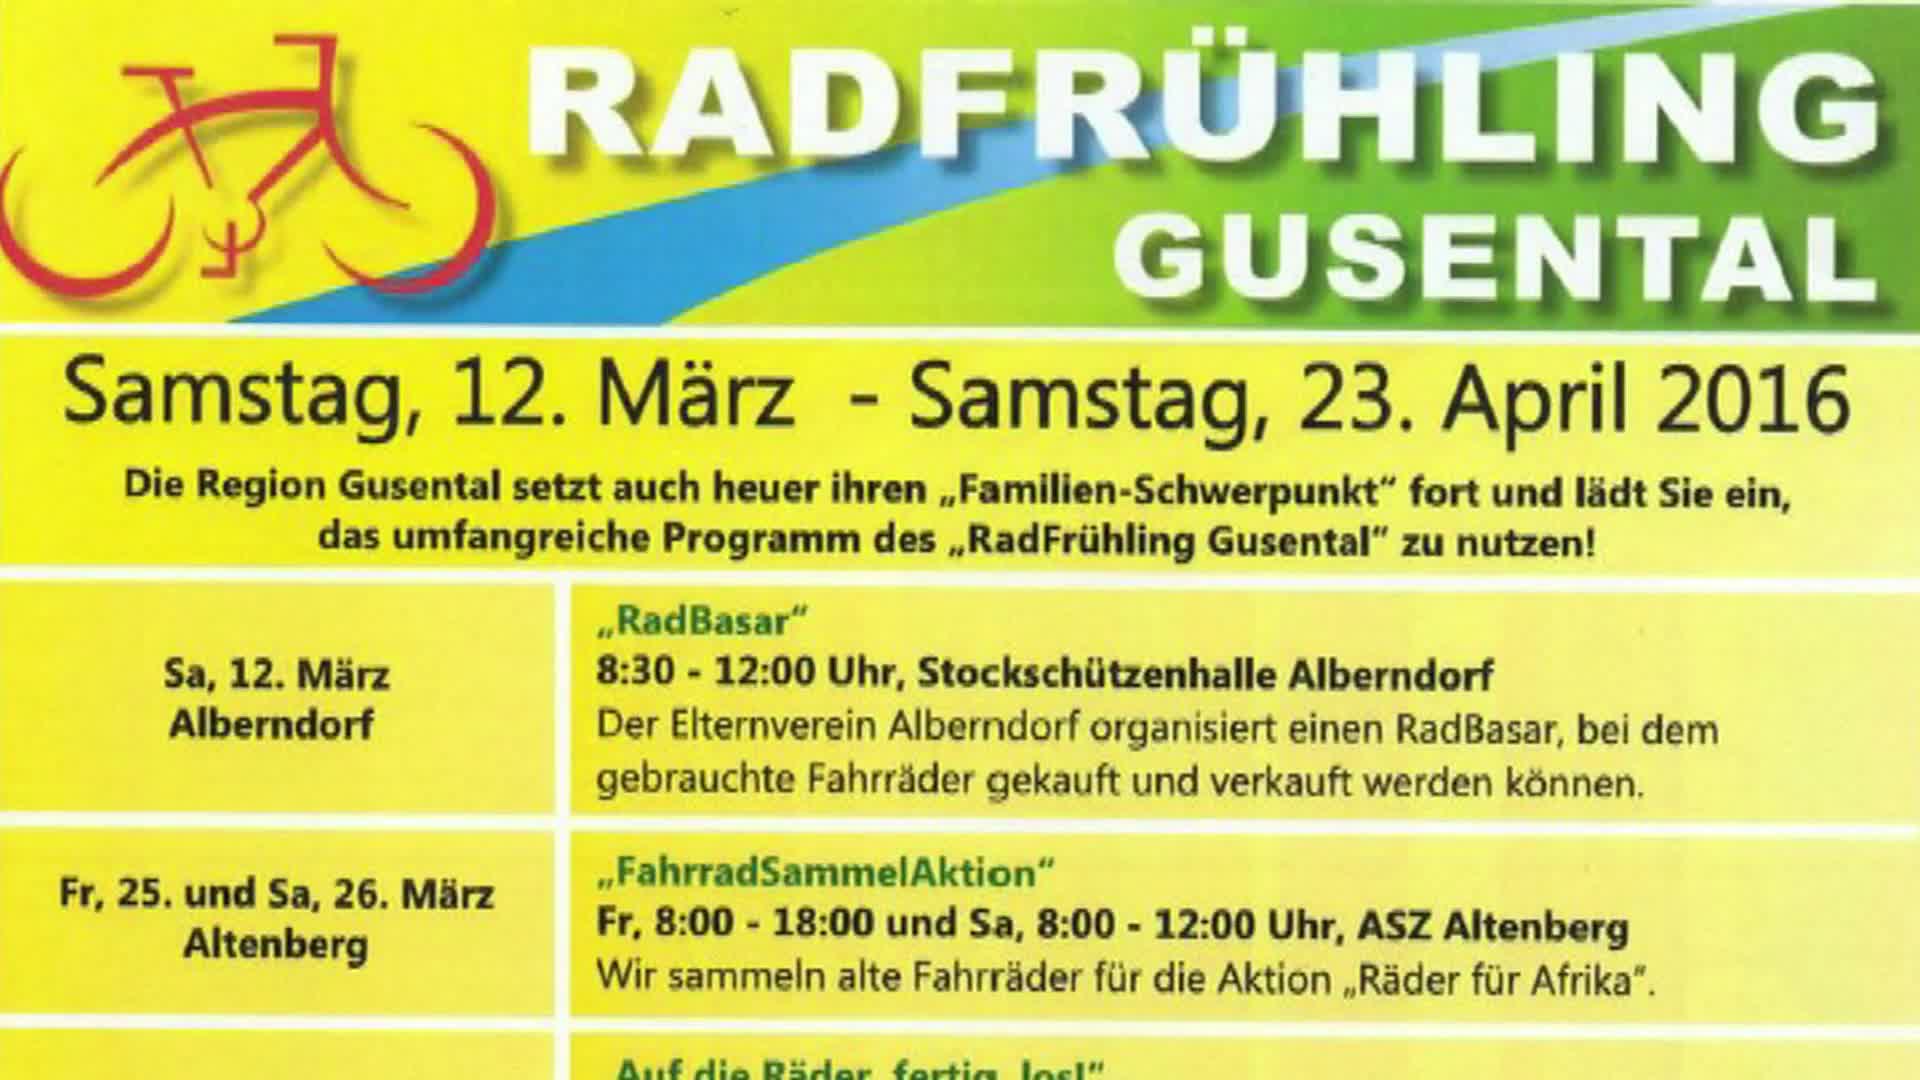 RadFrühling im Gusental 2016